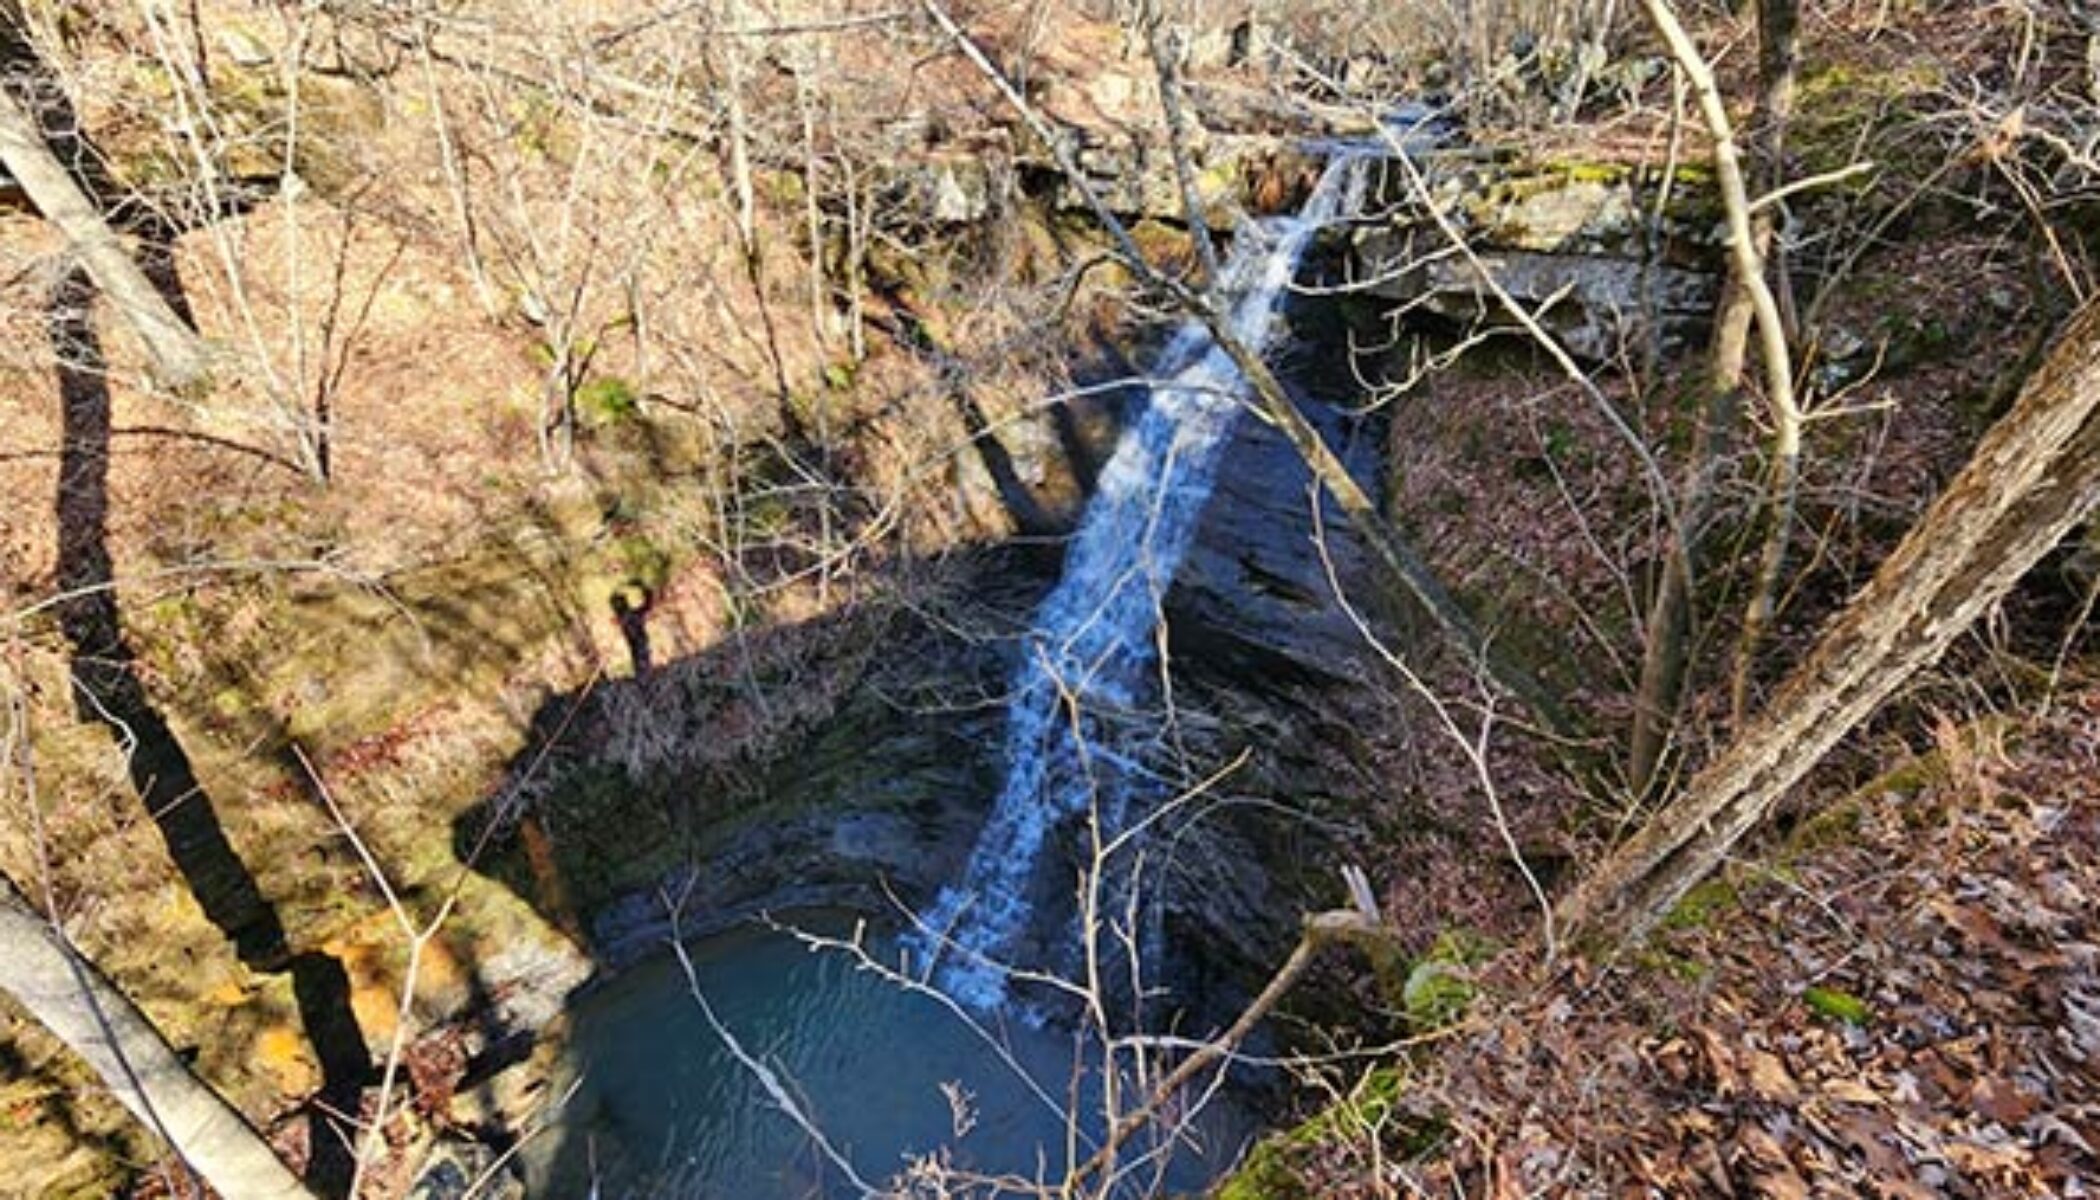 Rick's Hiking Blog: Paradise Falls, Upper Buffalo Wilderness